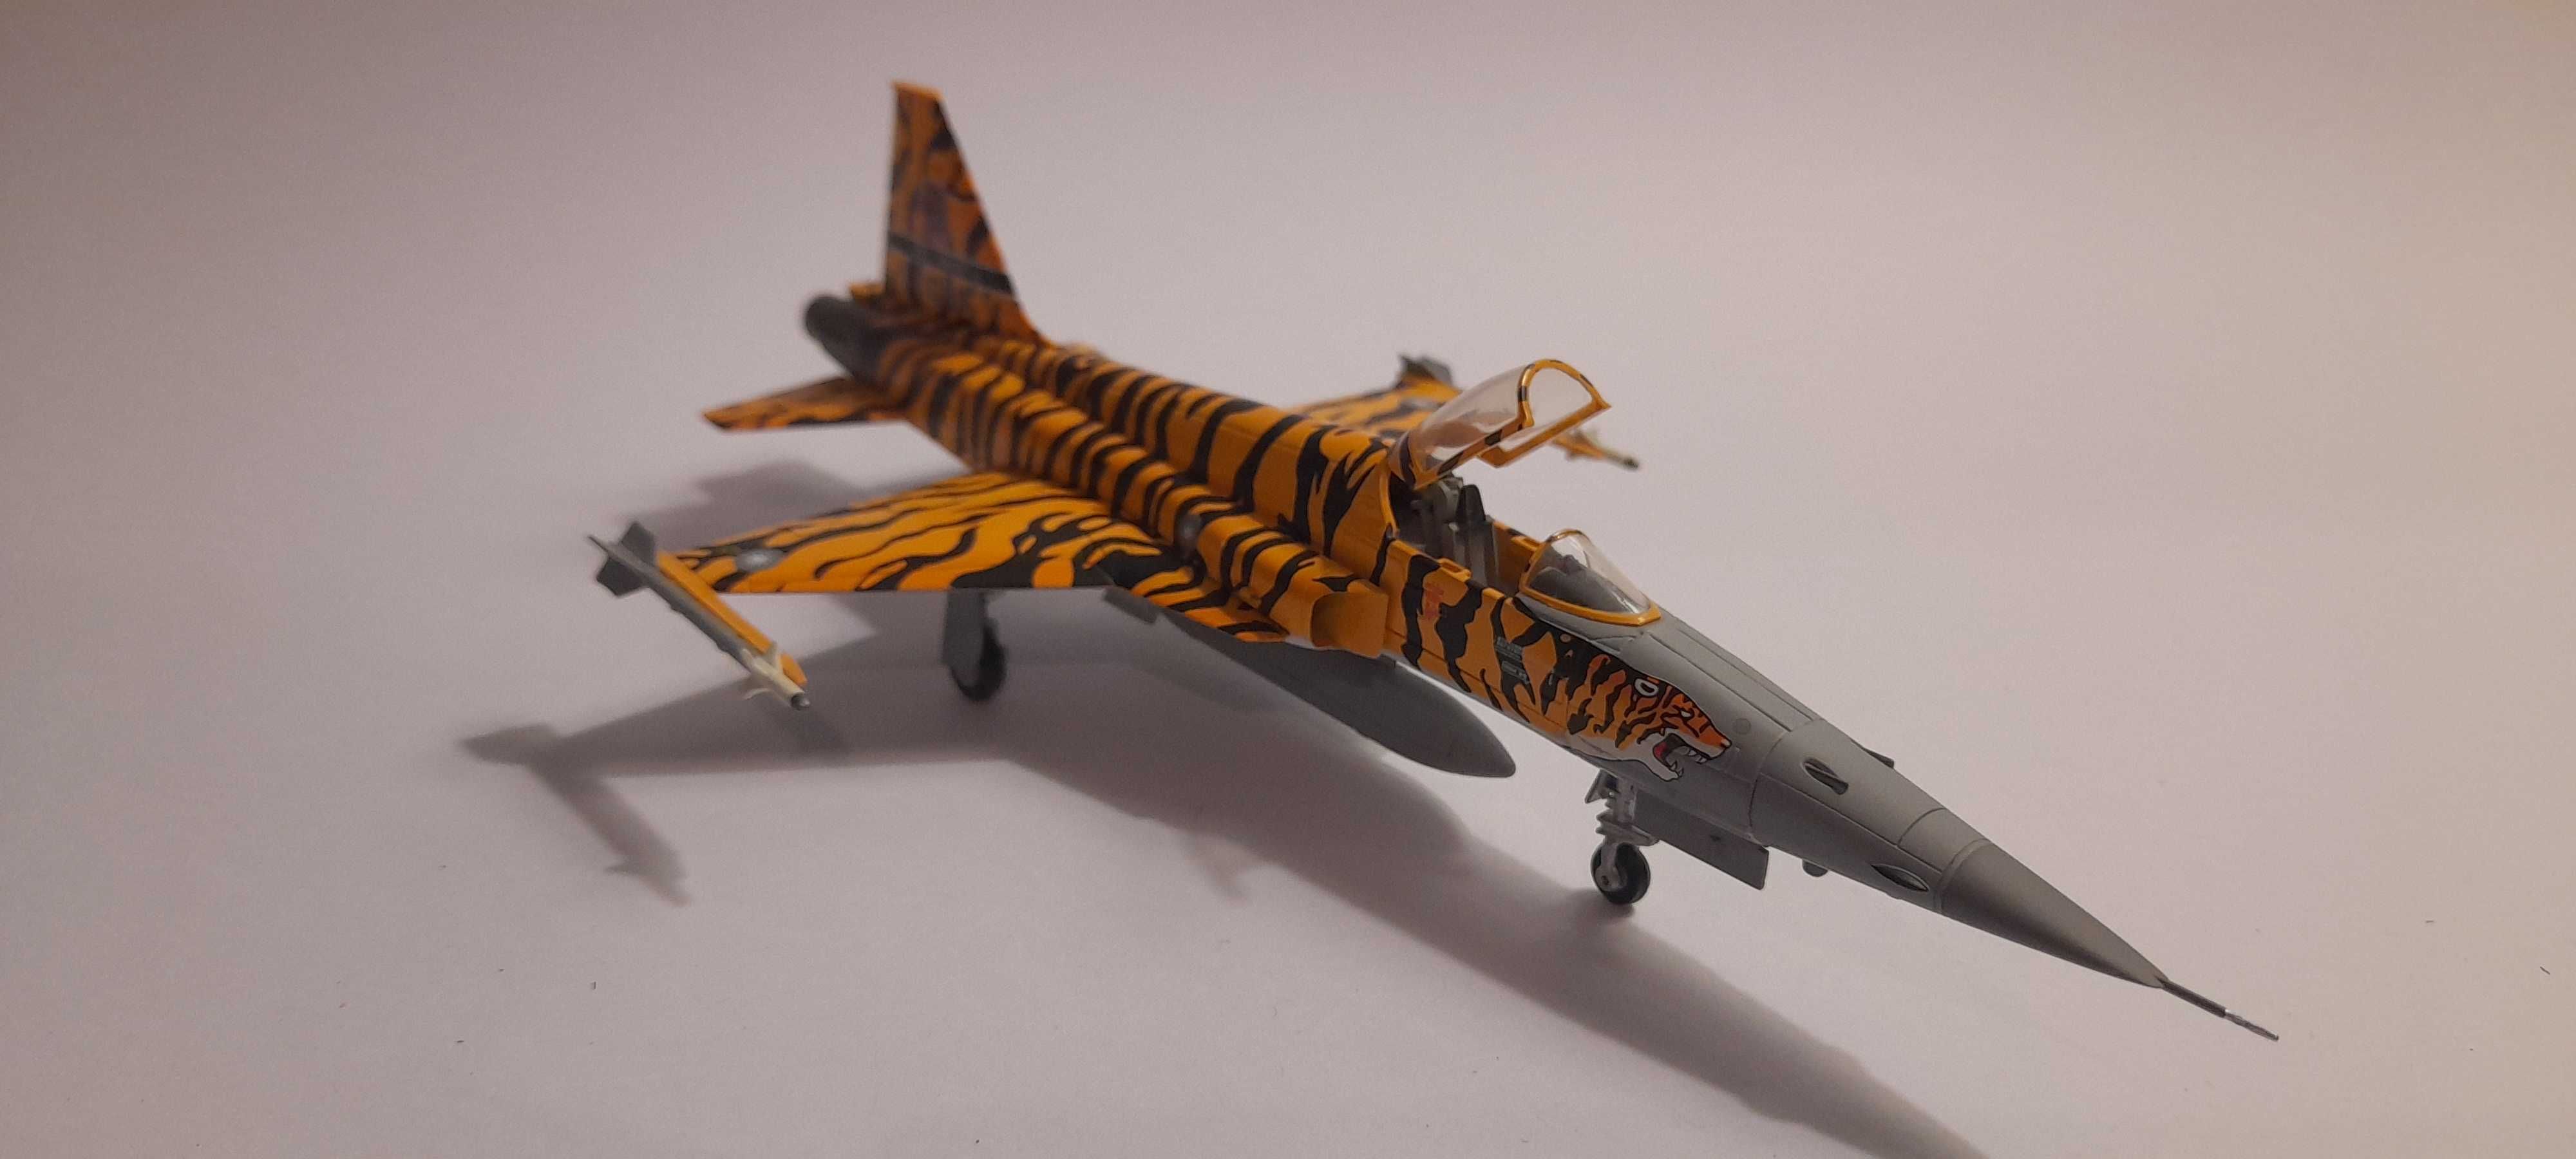 Aeronave Diecast Hobby Master 1:72 HA3308 Northrop F-5E Tiger II